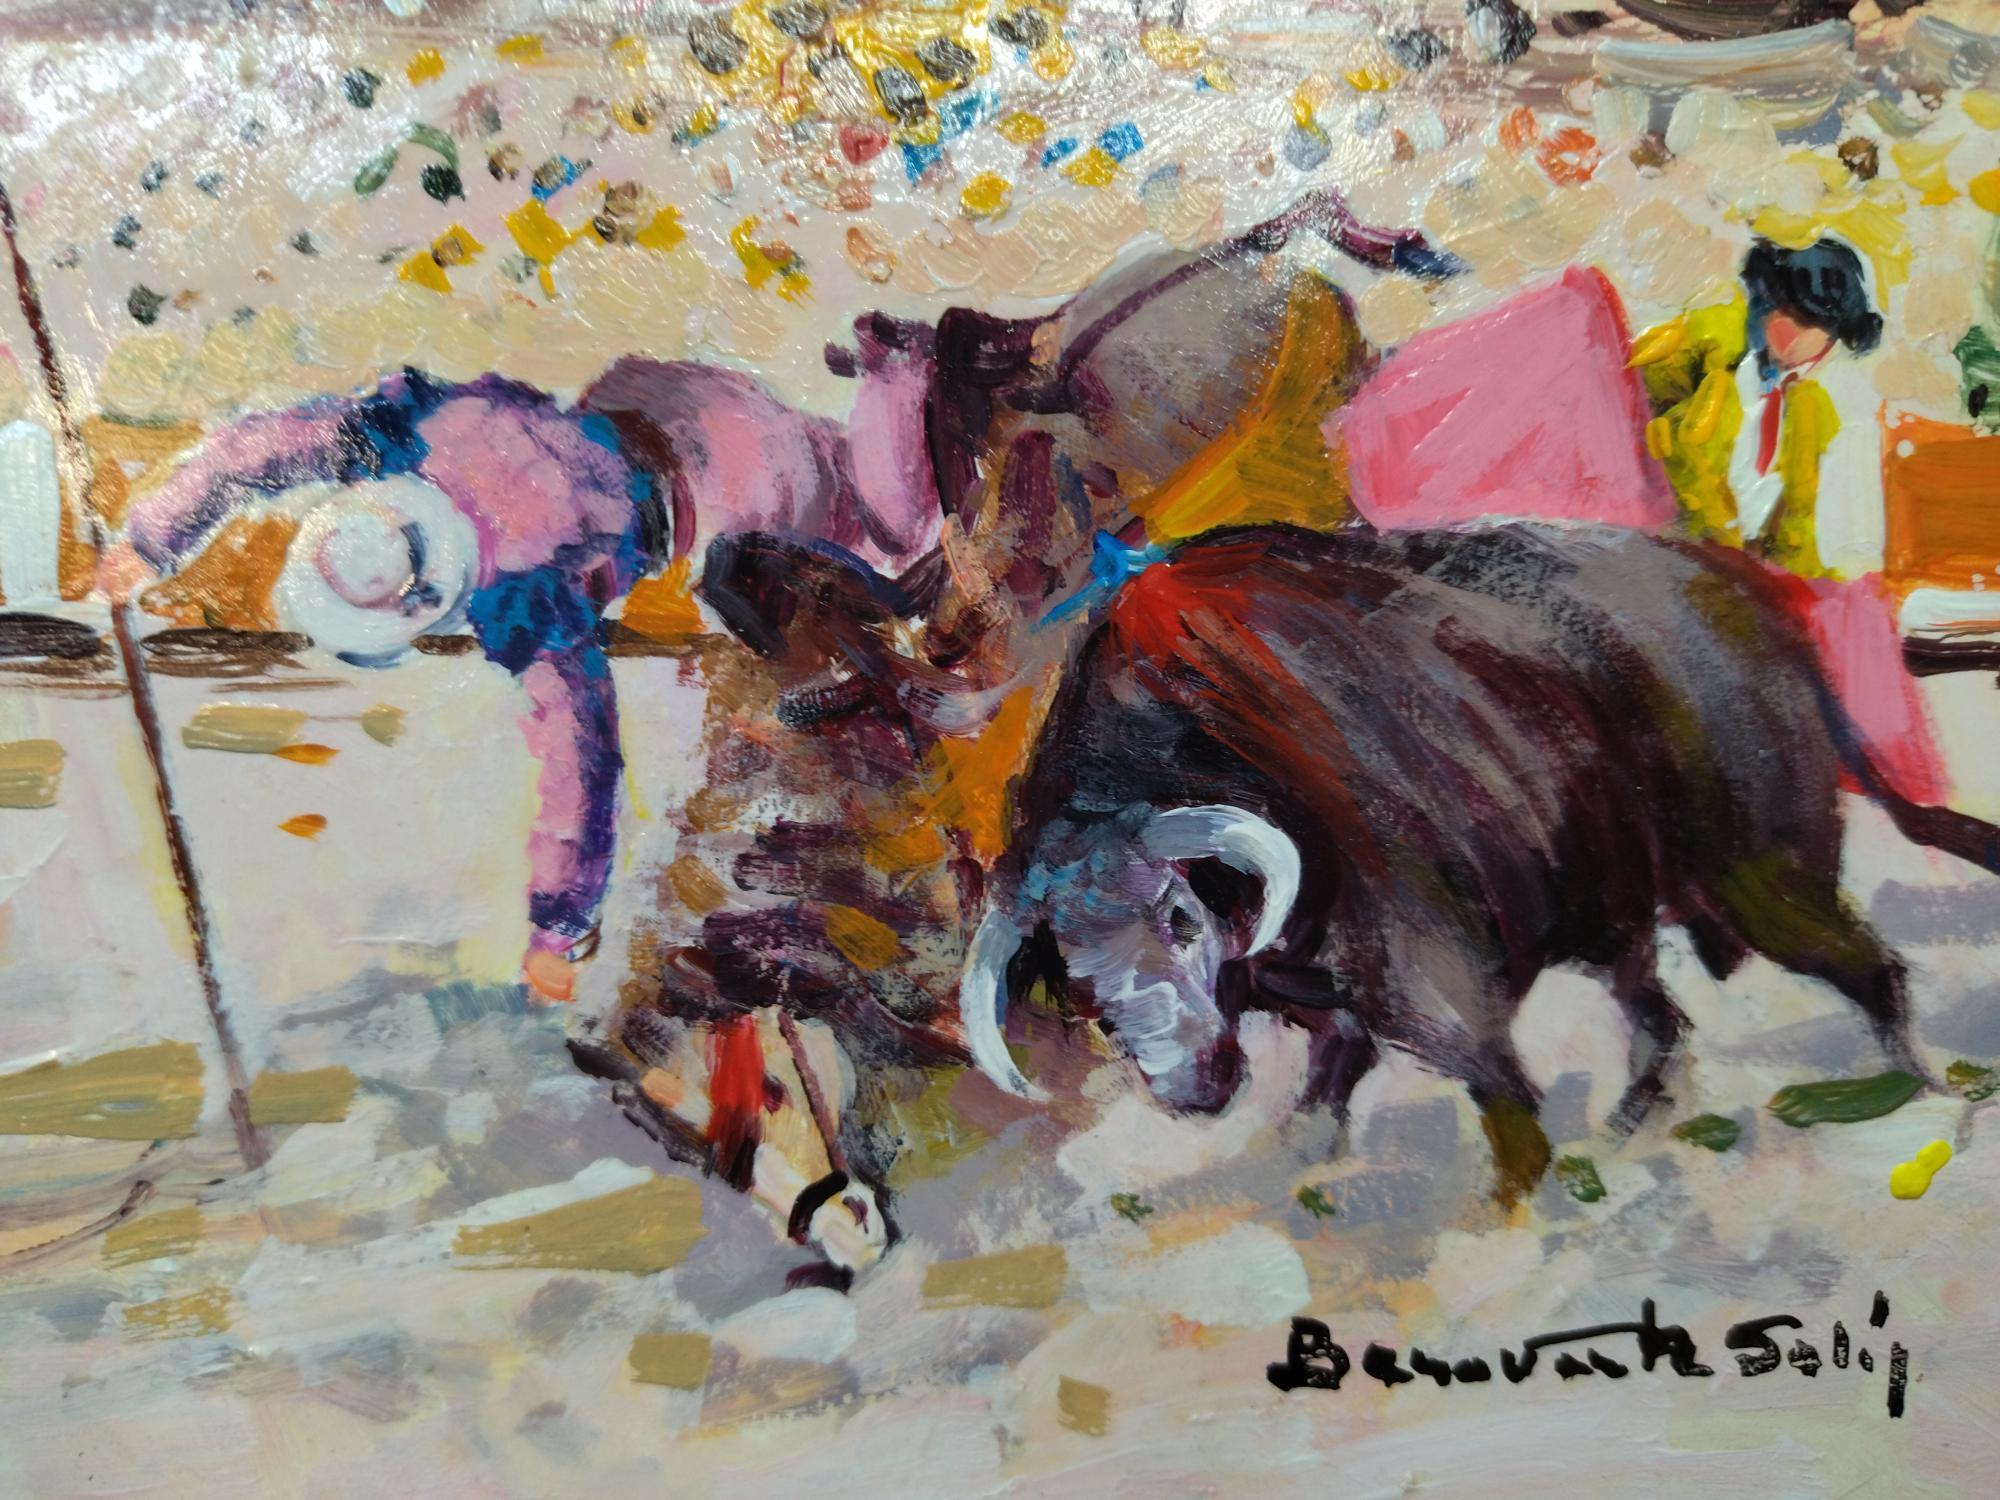   Benavente Solís  46.2 bullfight. picador. little original expressionist  - Painting by Benavente Solis